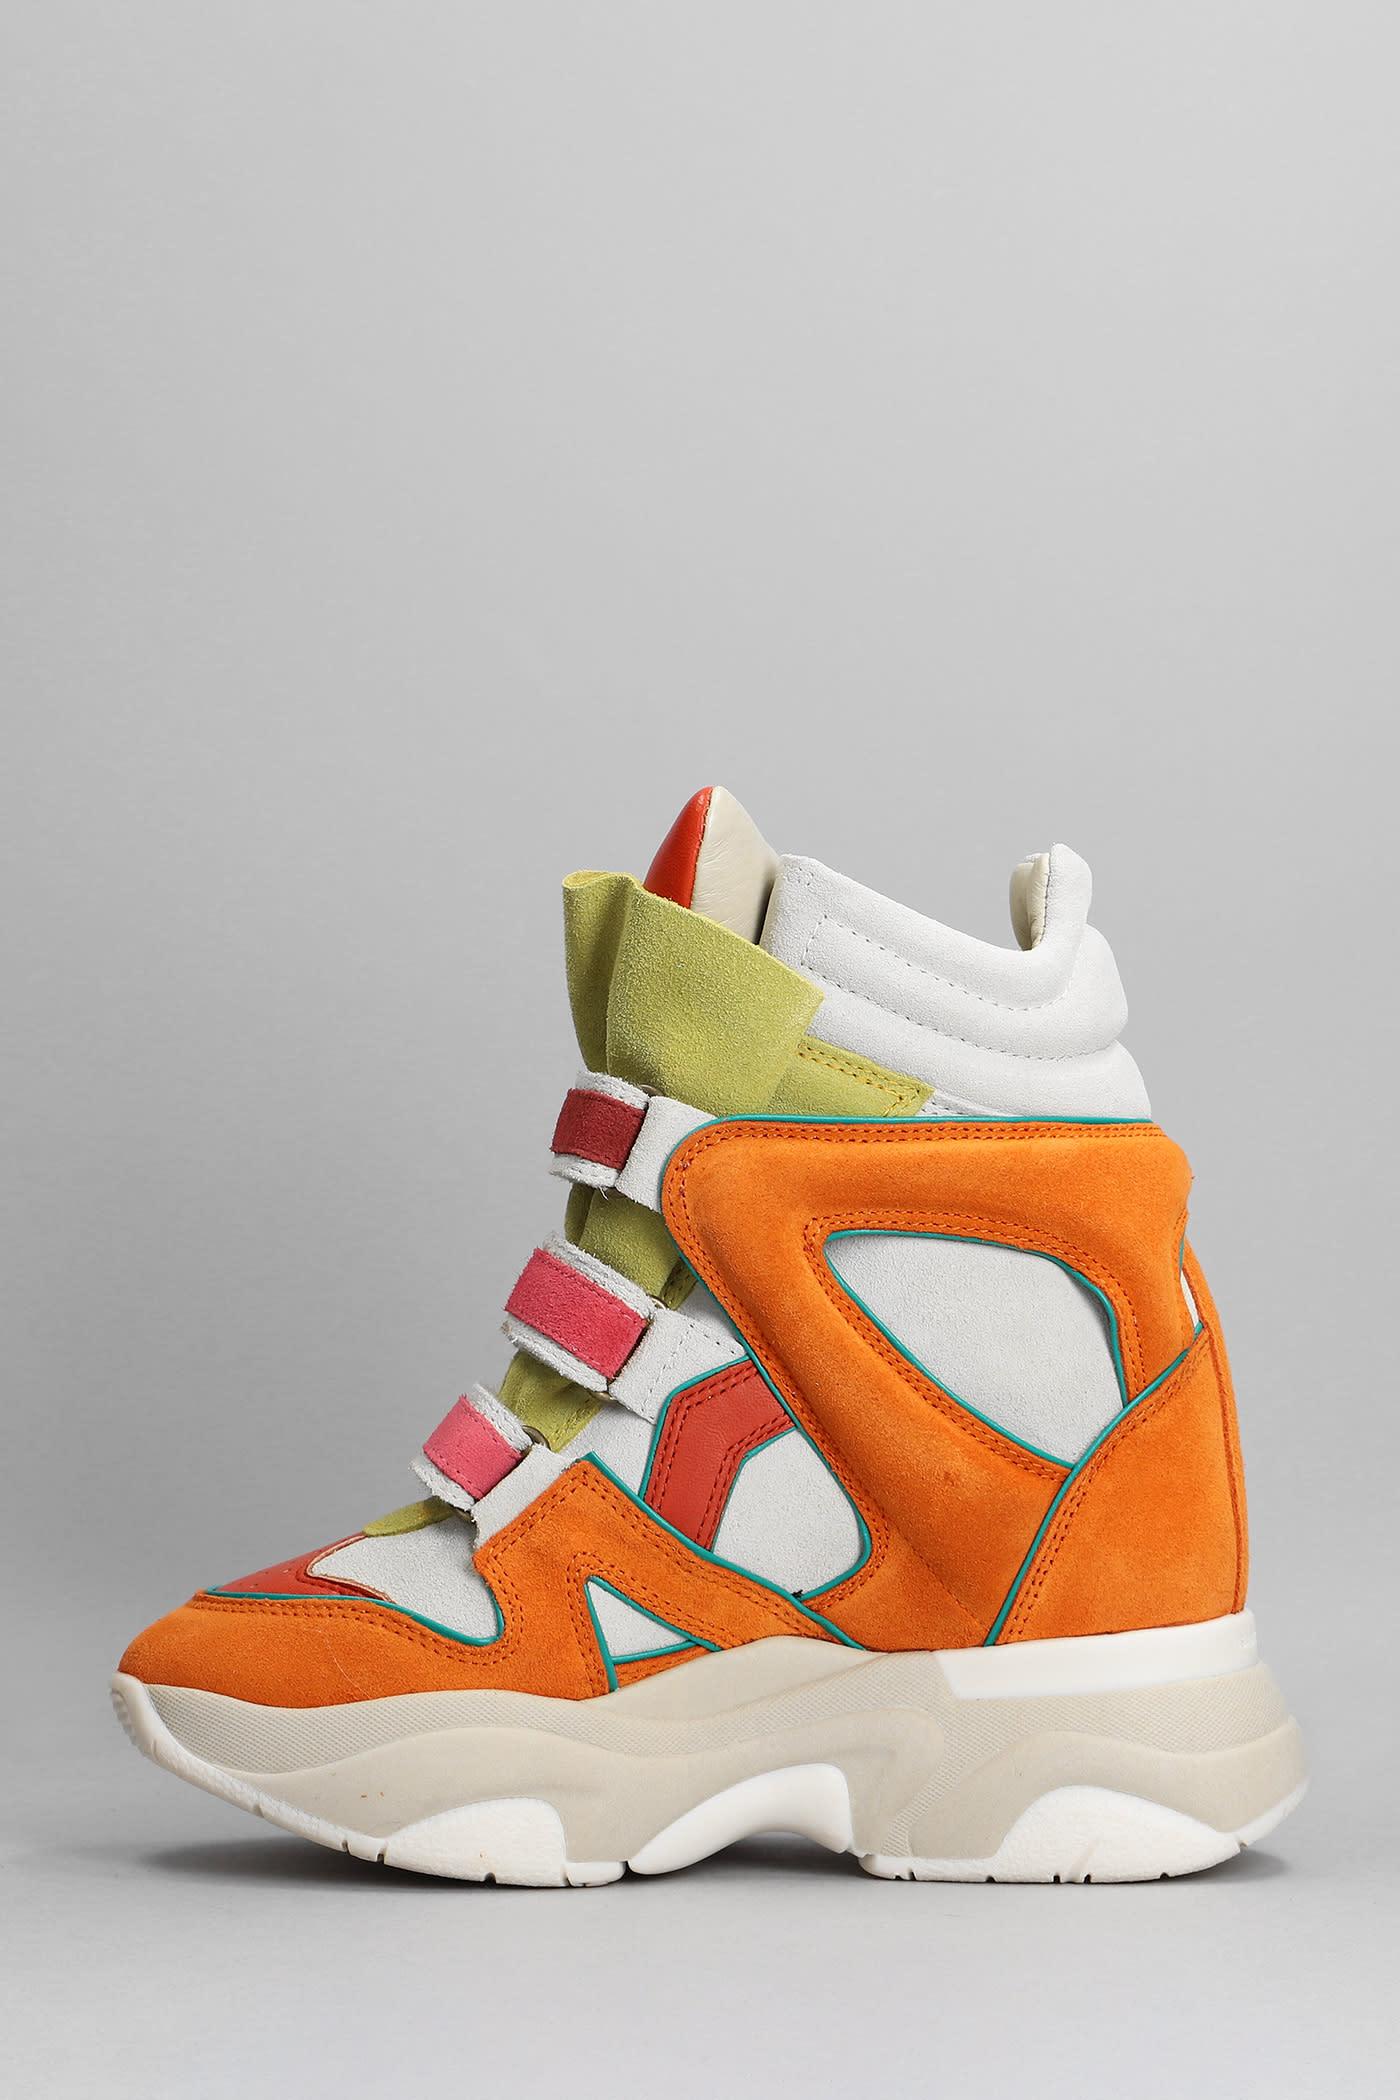 Isabel Marant Balskee Sneakers In Orange Suede Leather | Lyst